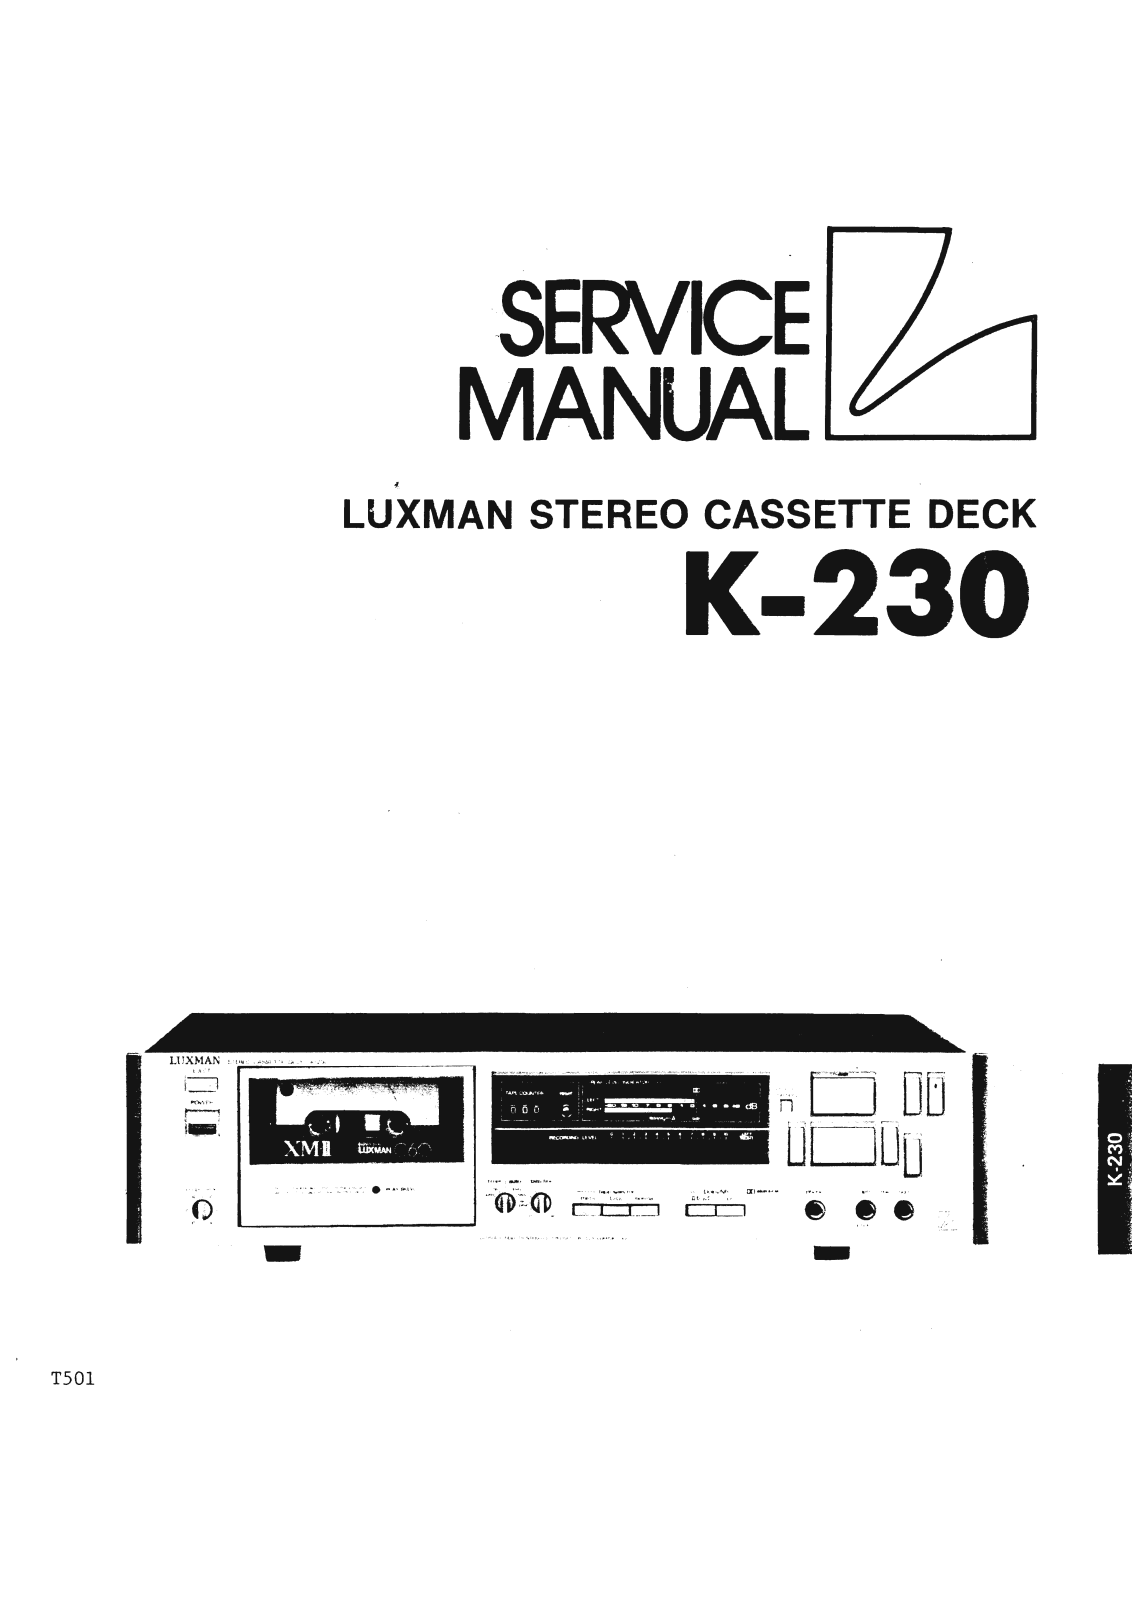 Luxman K-230 Service Manual